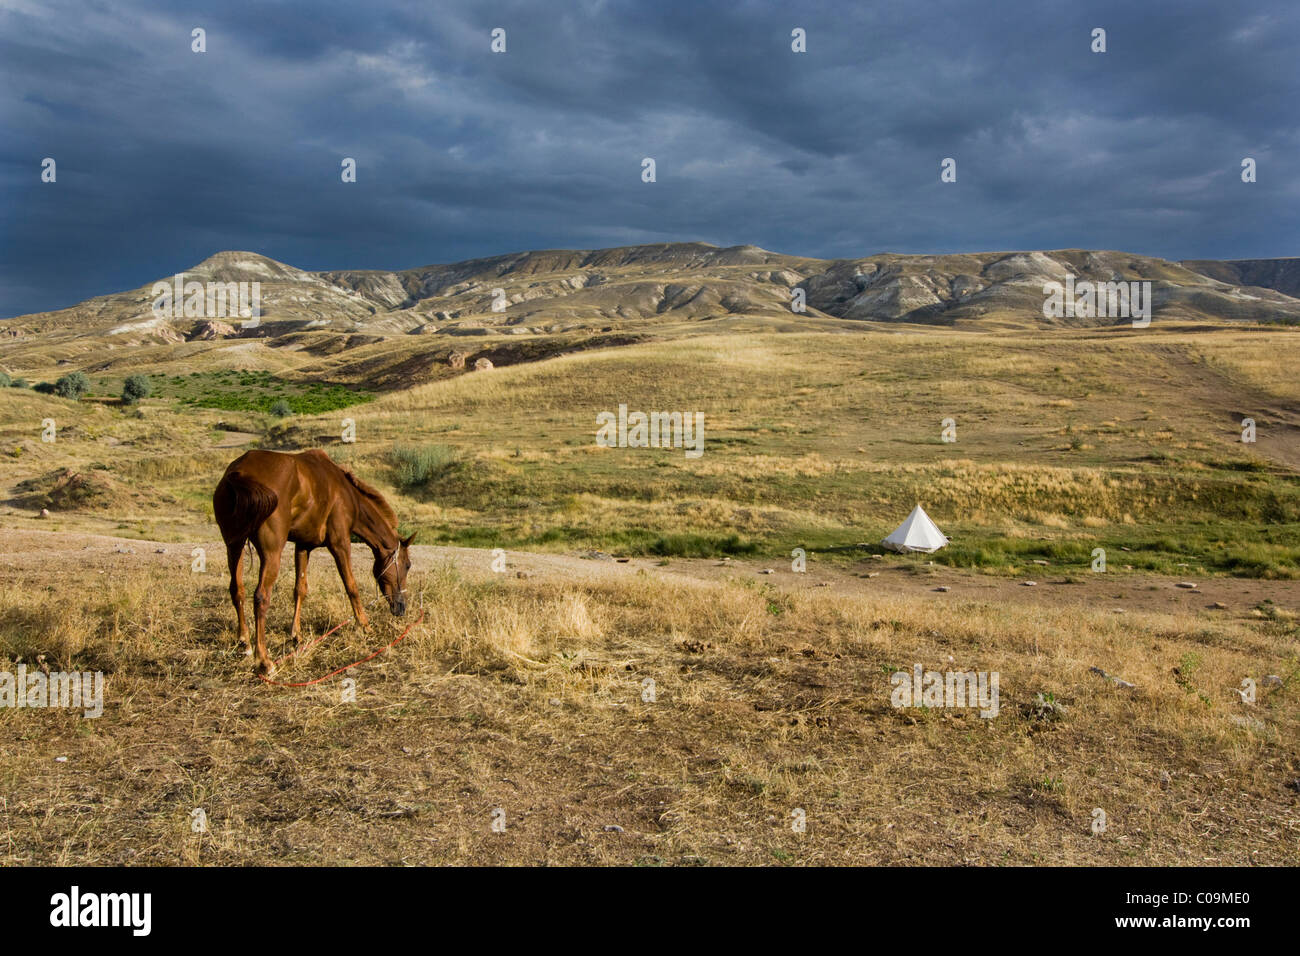 Horse in stormy atmosphere in tufa landscape, Cappadocia, central Anatolia, Turkey, Asia Stock Photo